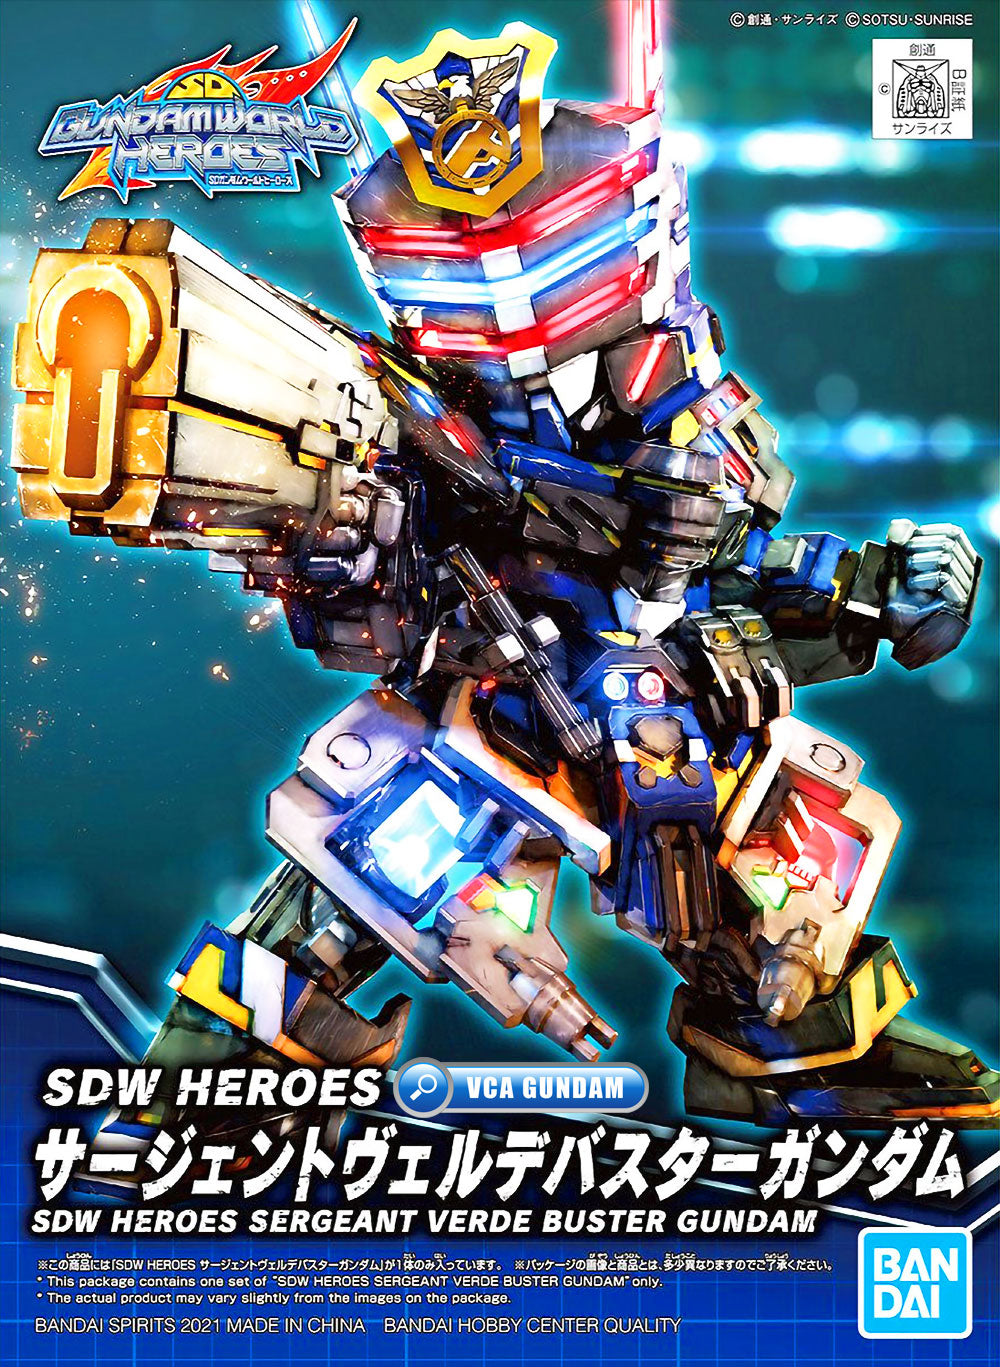 Bandai Gunpla World Heroes SD SERGEANT VERDE BUSTER GUNDAM Box Art